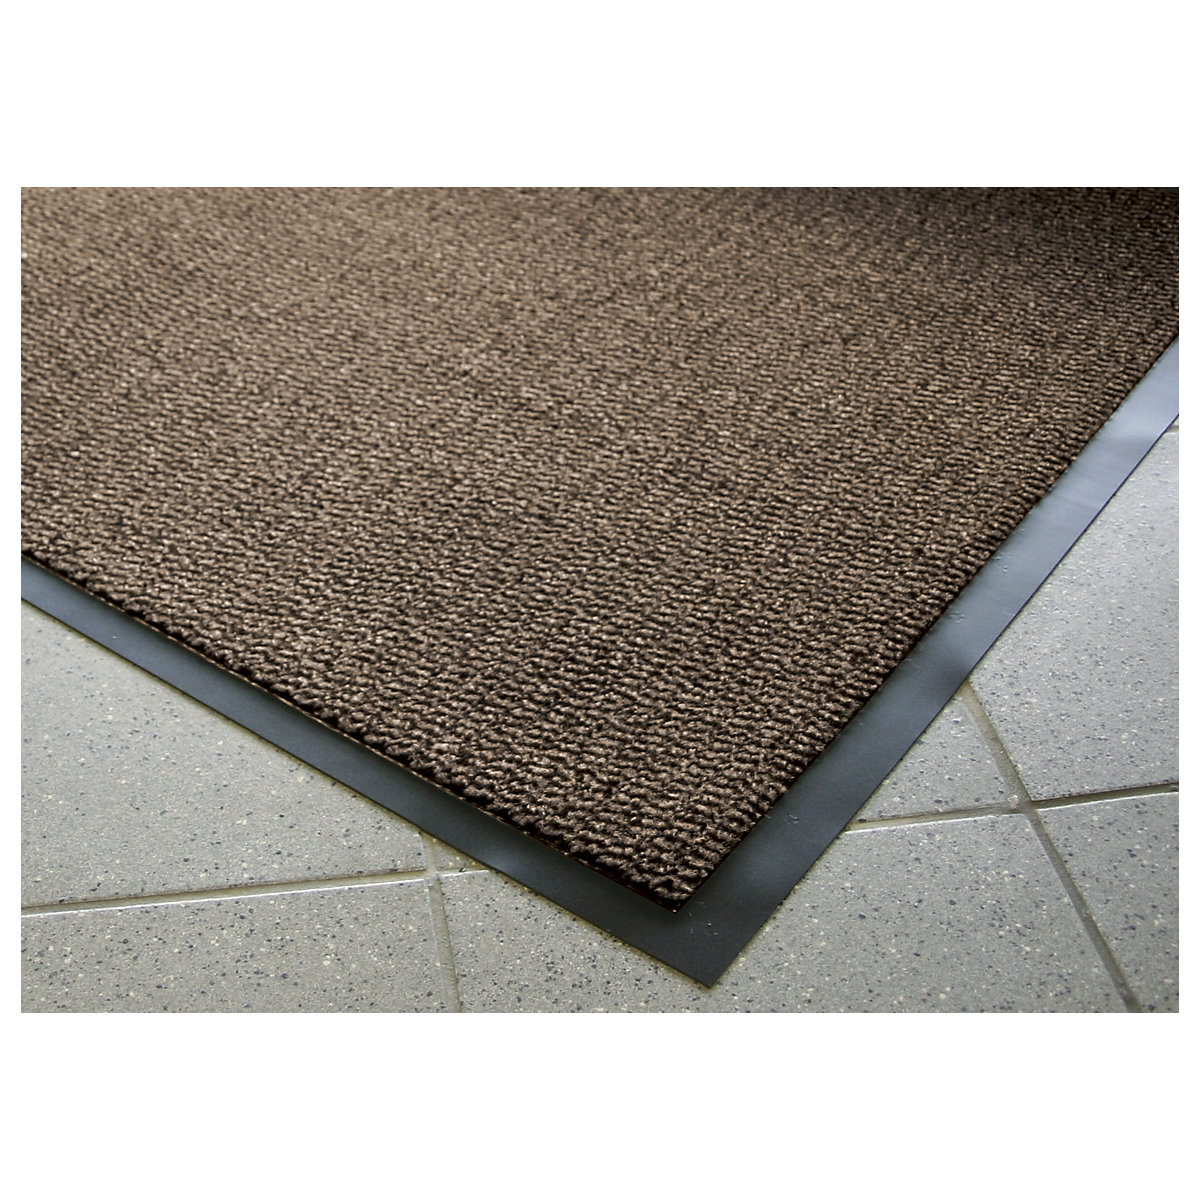 Entrance matting for indoor use, polypropylene pile, LxW 900 x 600 mm, pack of 2, black / brown